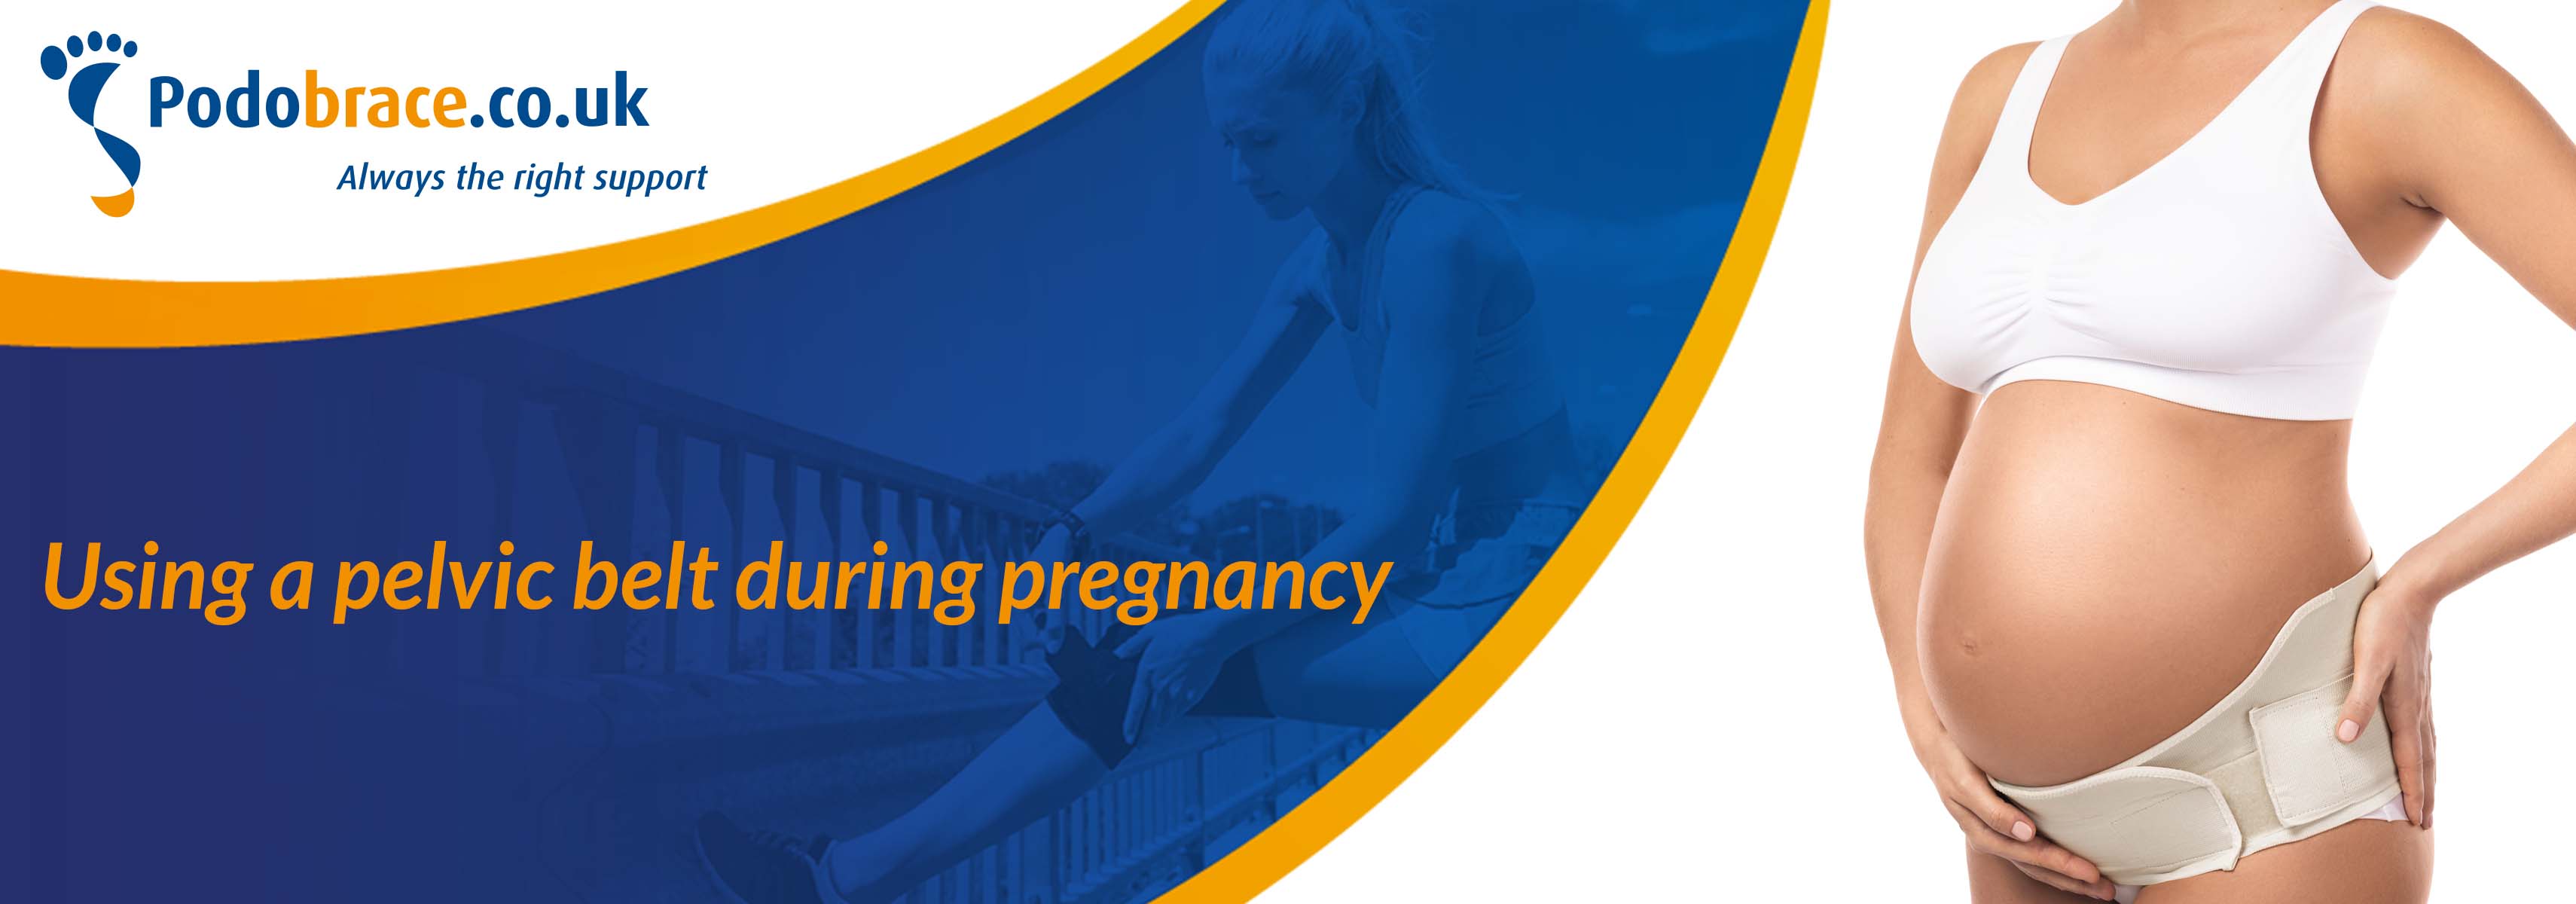 Using a pelvic belt during pregnancy